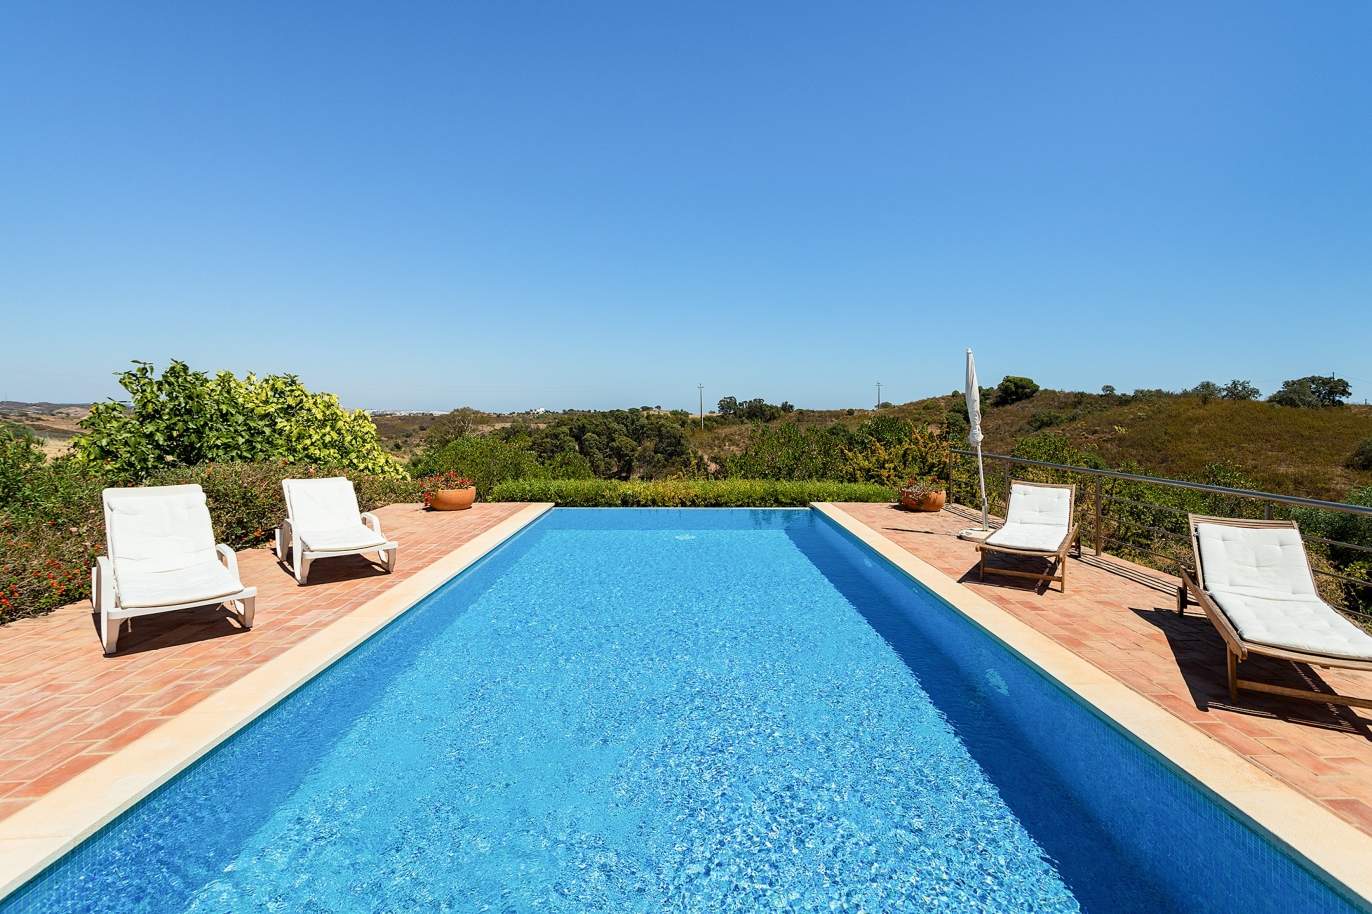 Moradia V4, com piscina e amplo terreno, Castro Marim, Algarve_174847